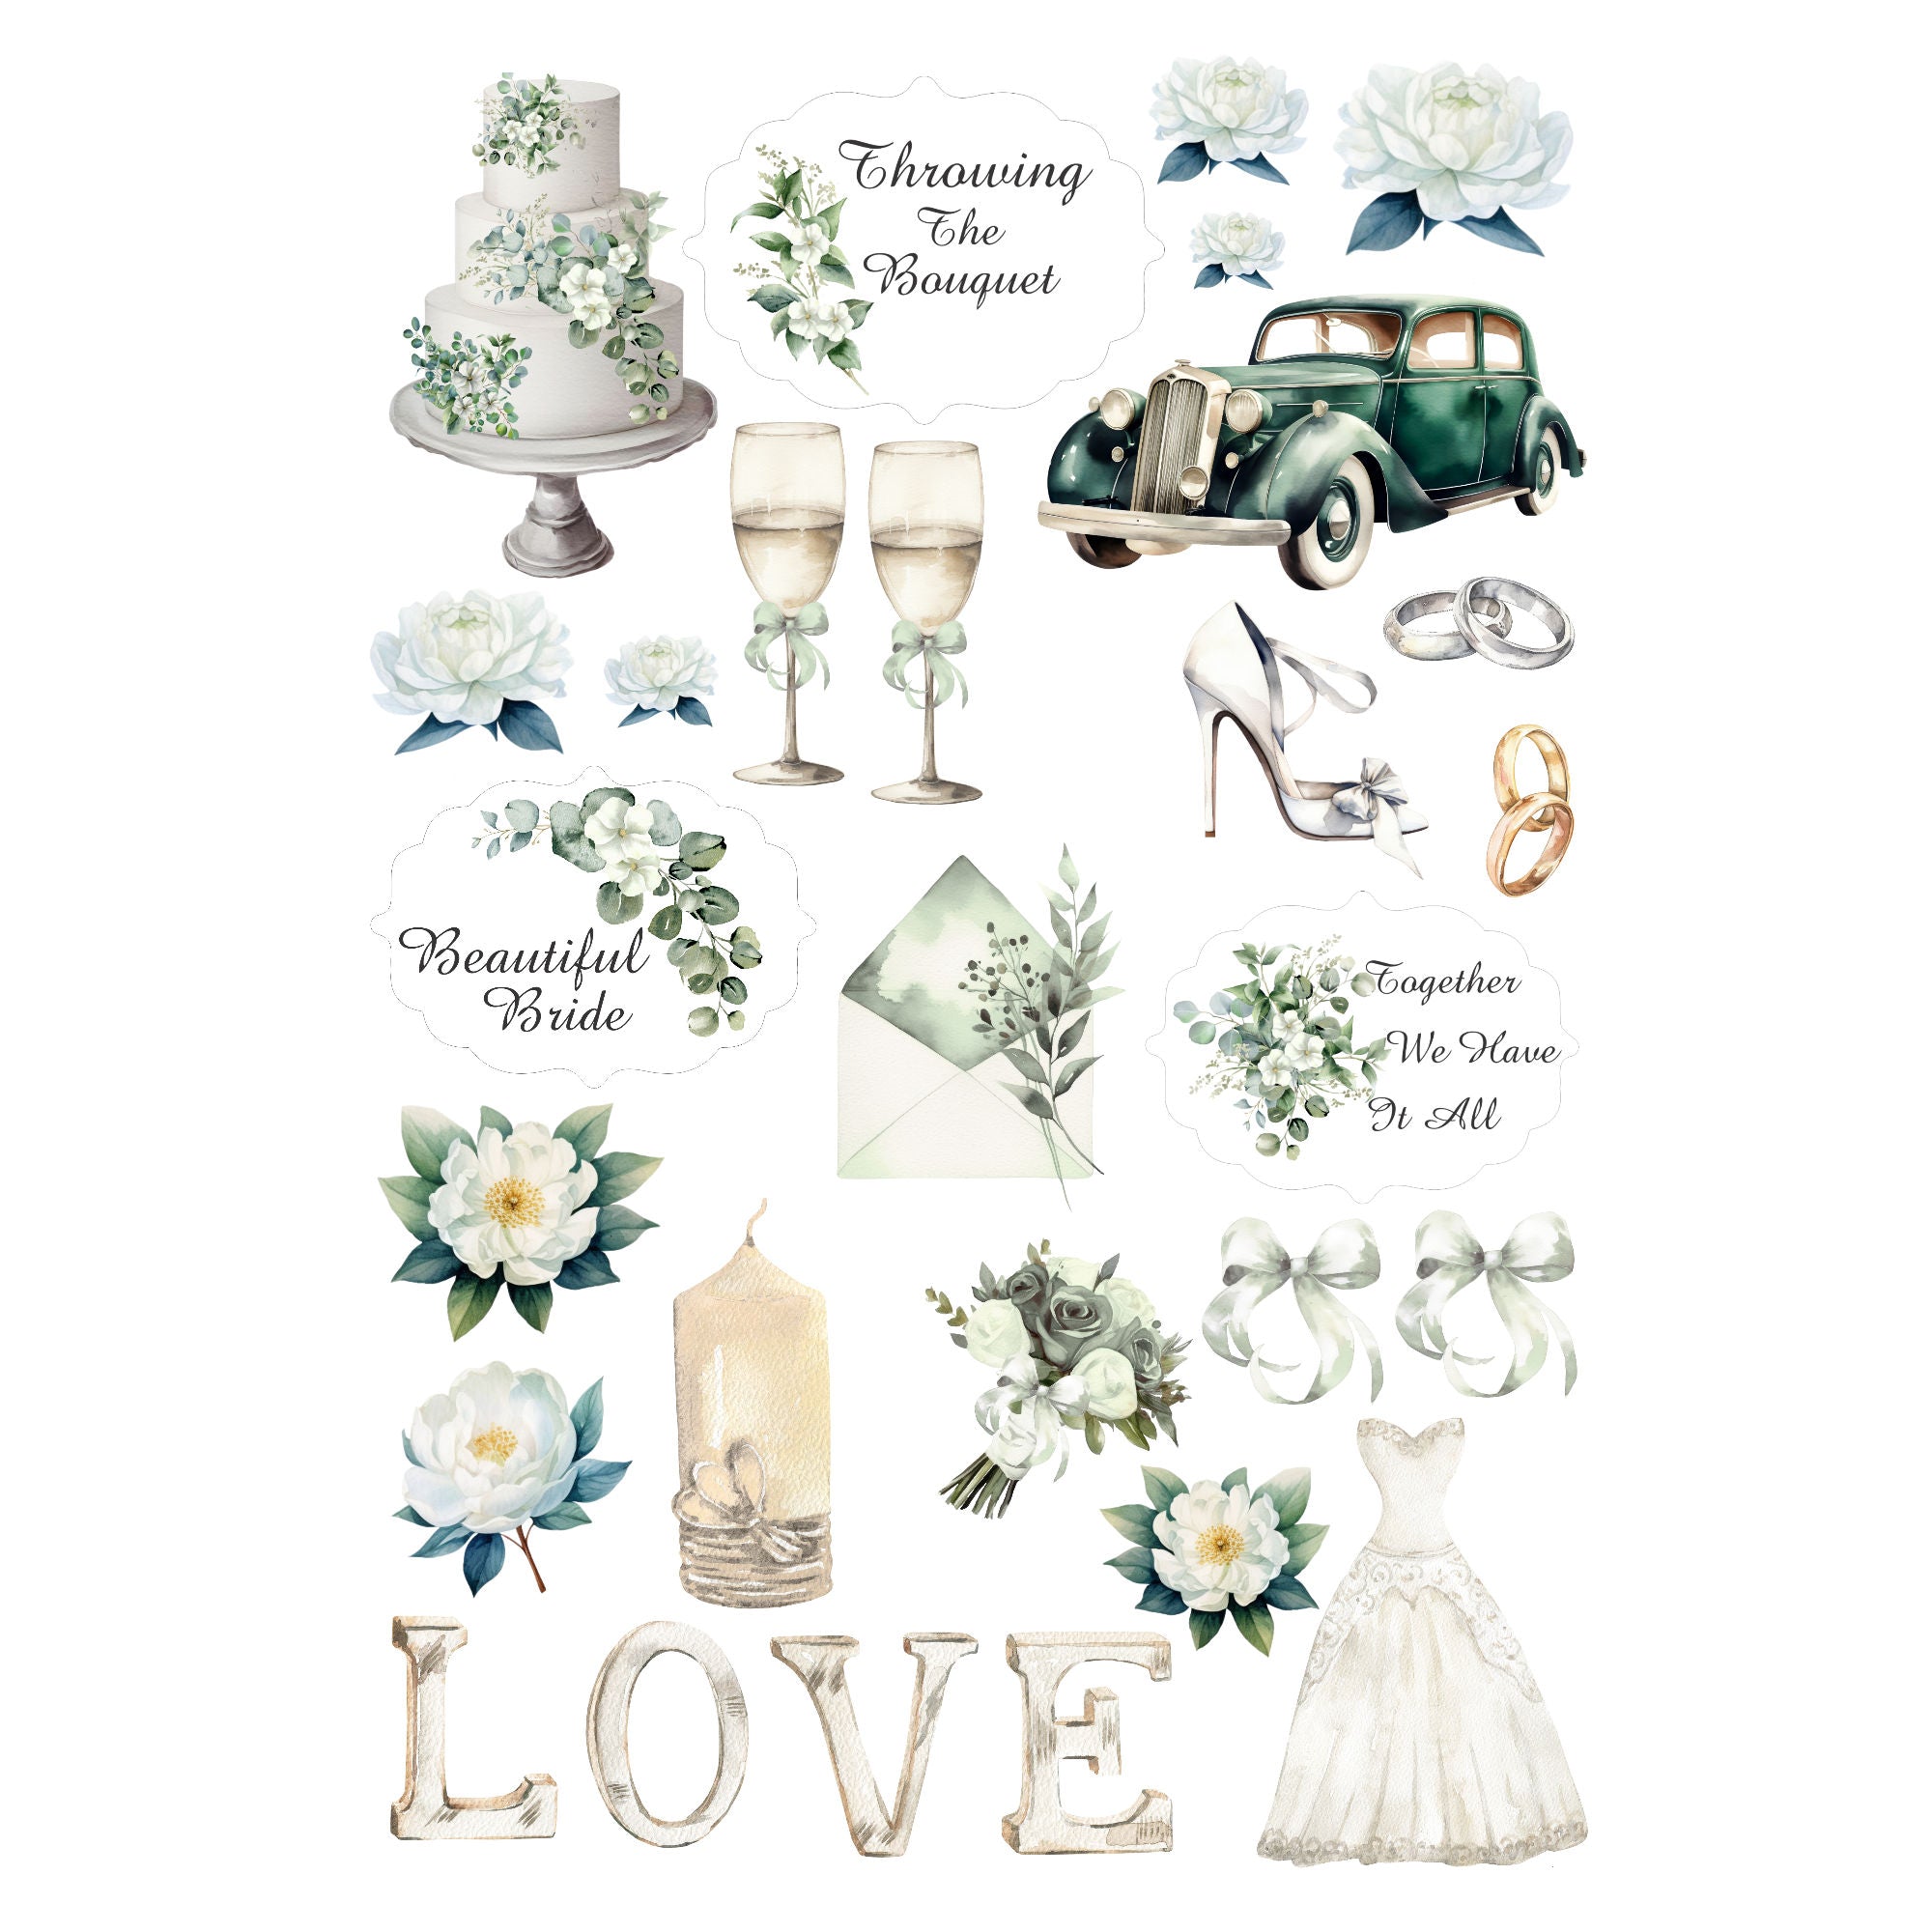 Love Always 12 x 12 Scrapbook Paper & Embellishment Kit by SSC Designs